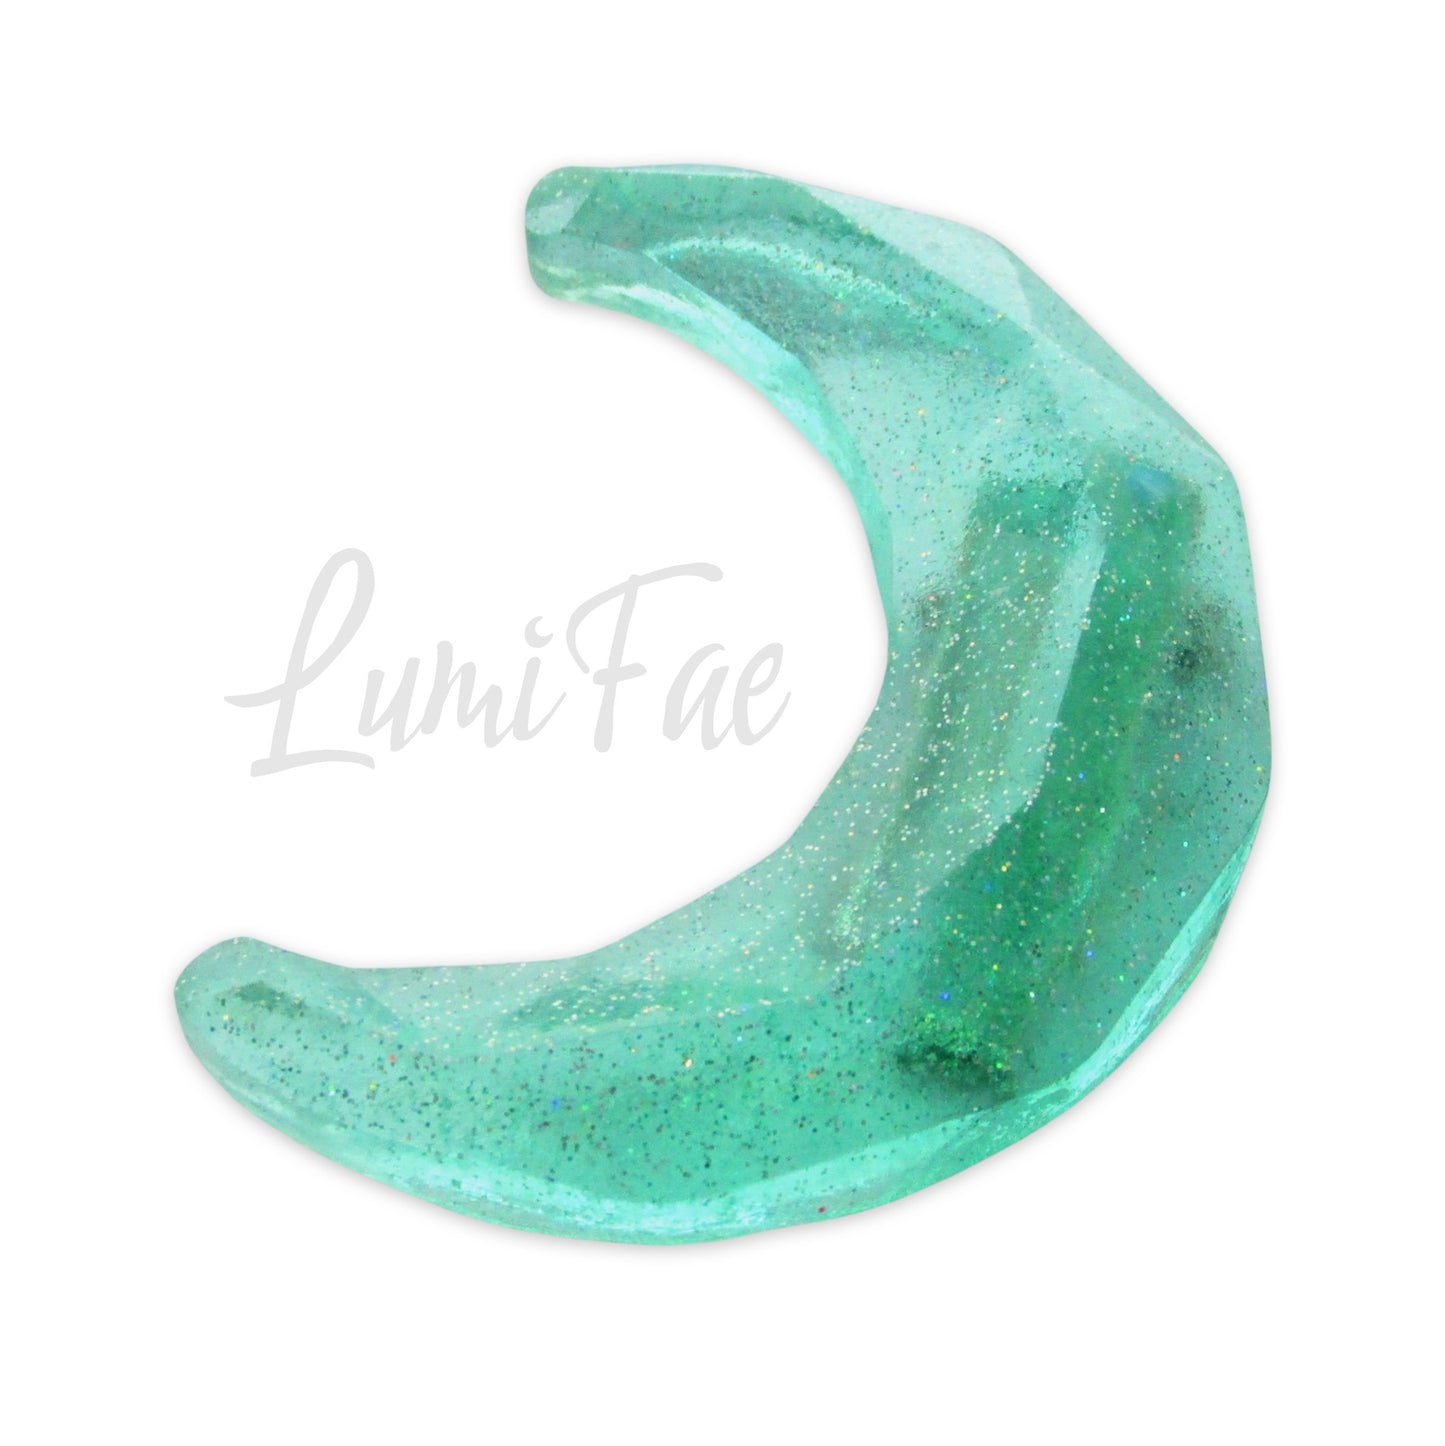 Aqua Blue Sparkly Translucent Moon Hair clip, 2.5”